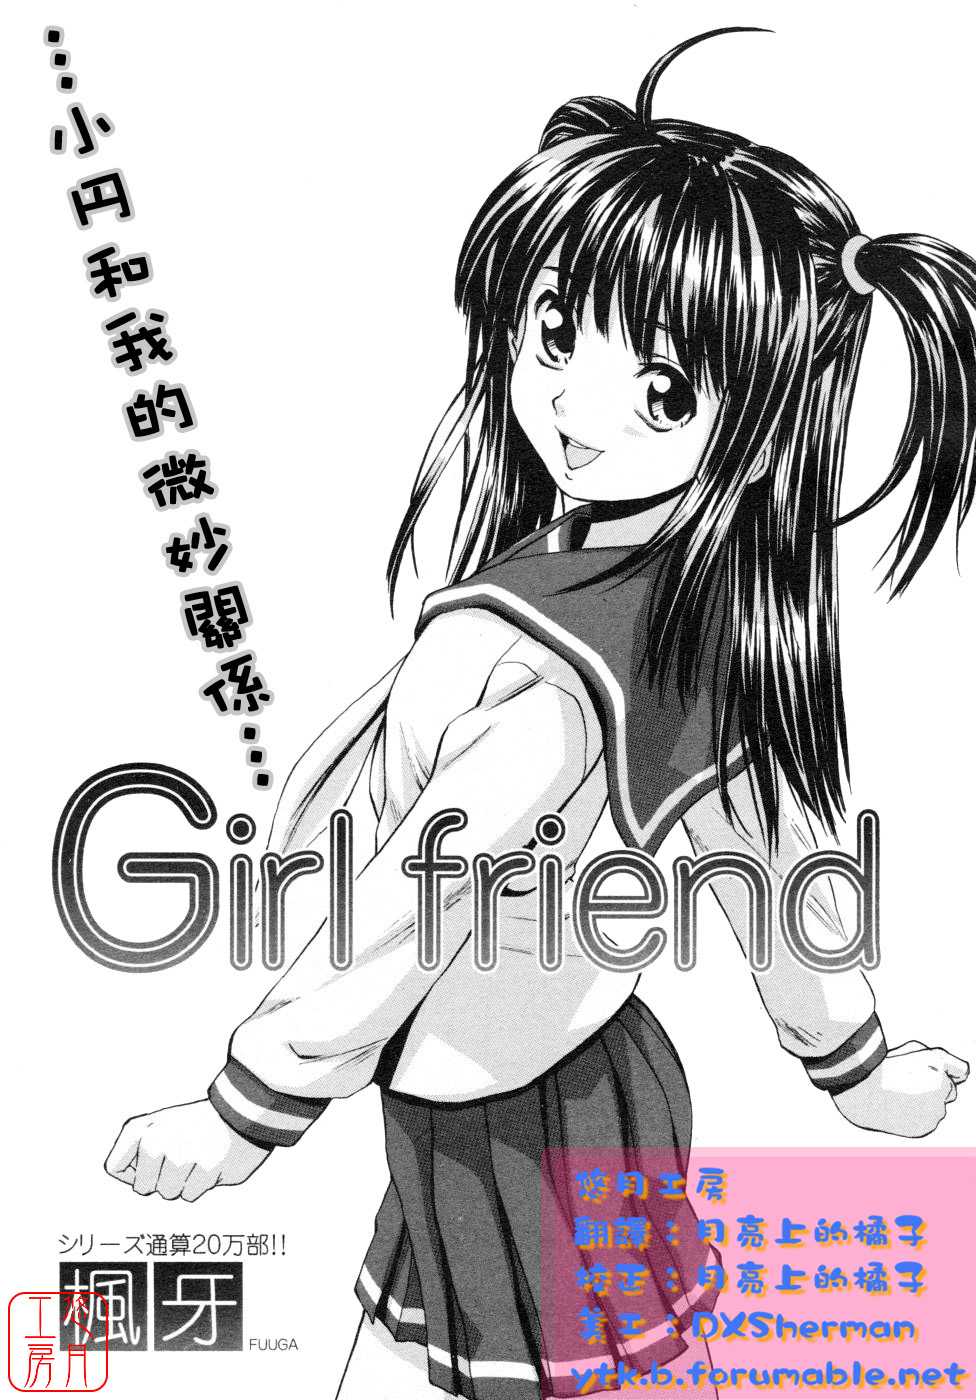 [Fuuga] Girl friend [ch] 